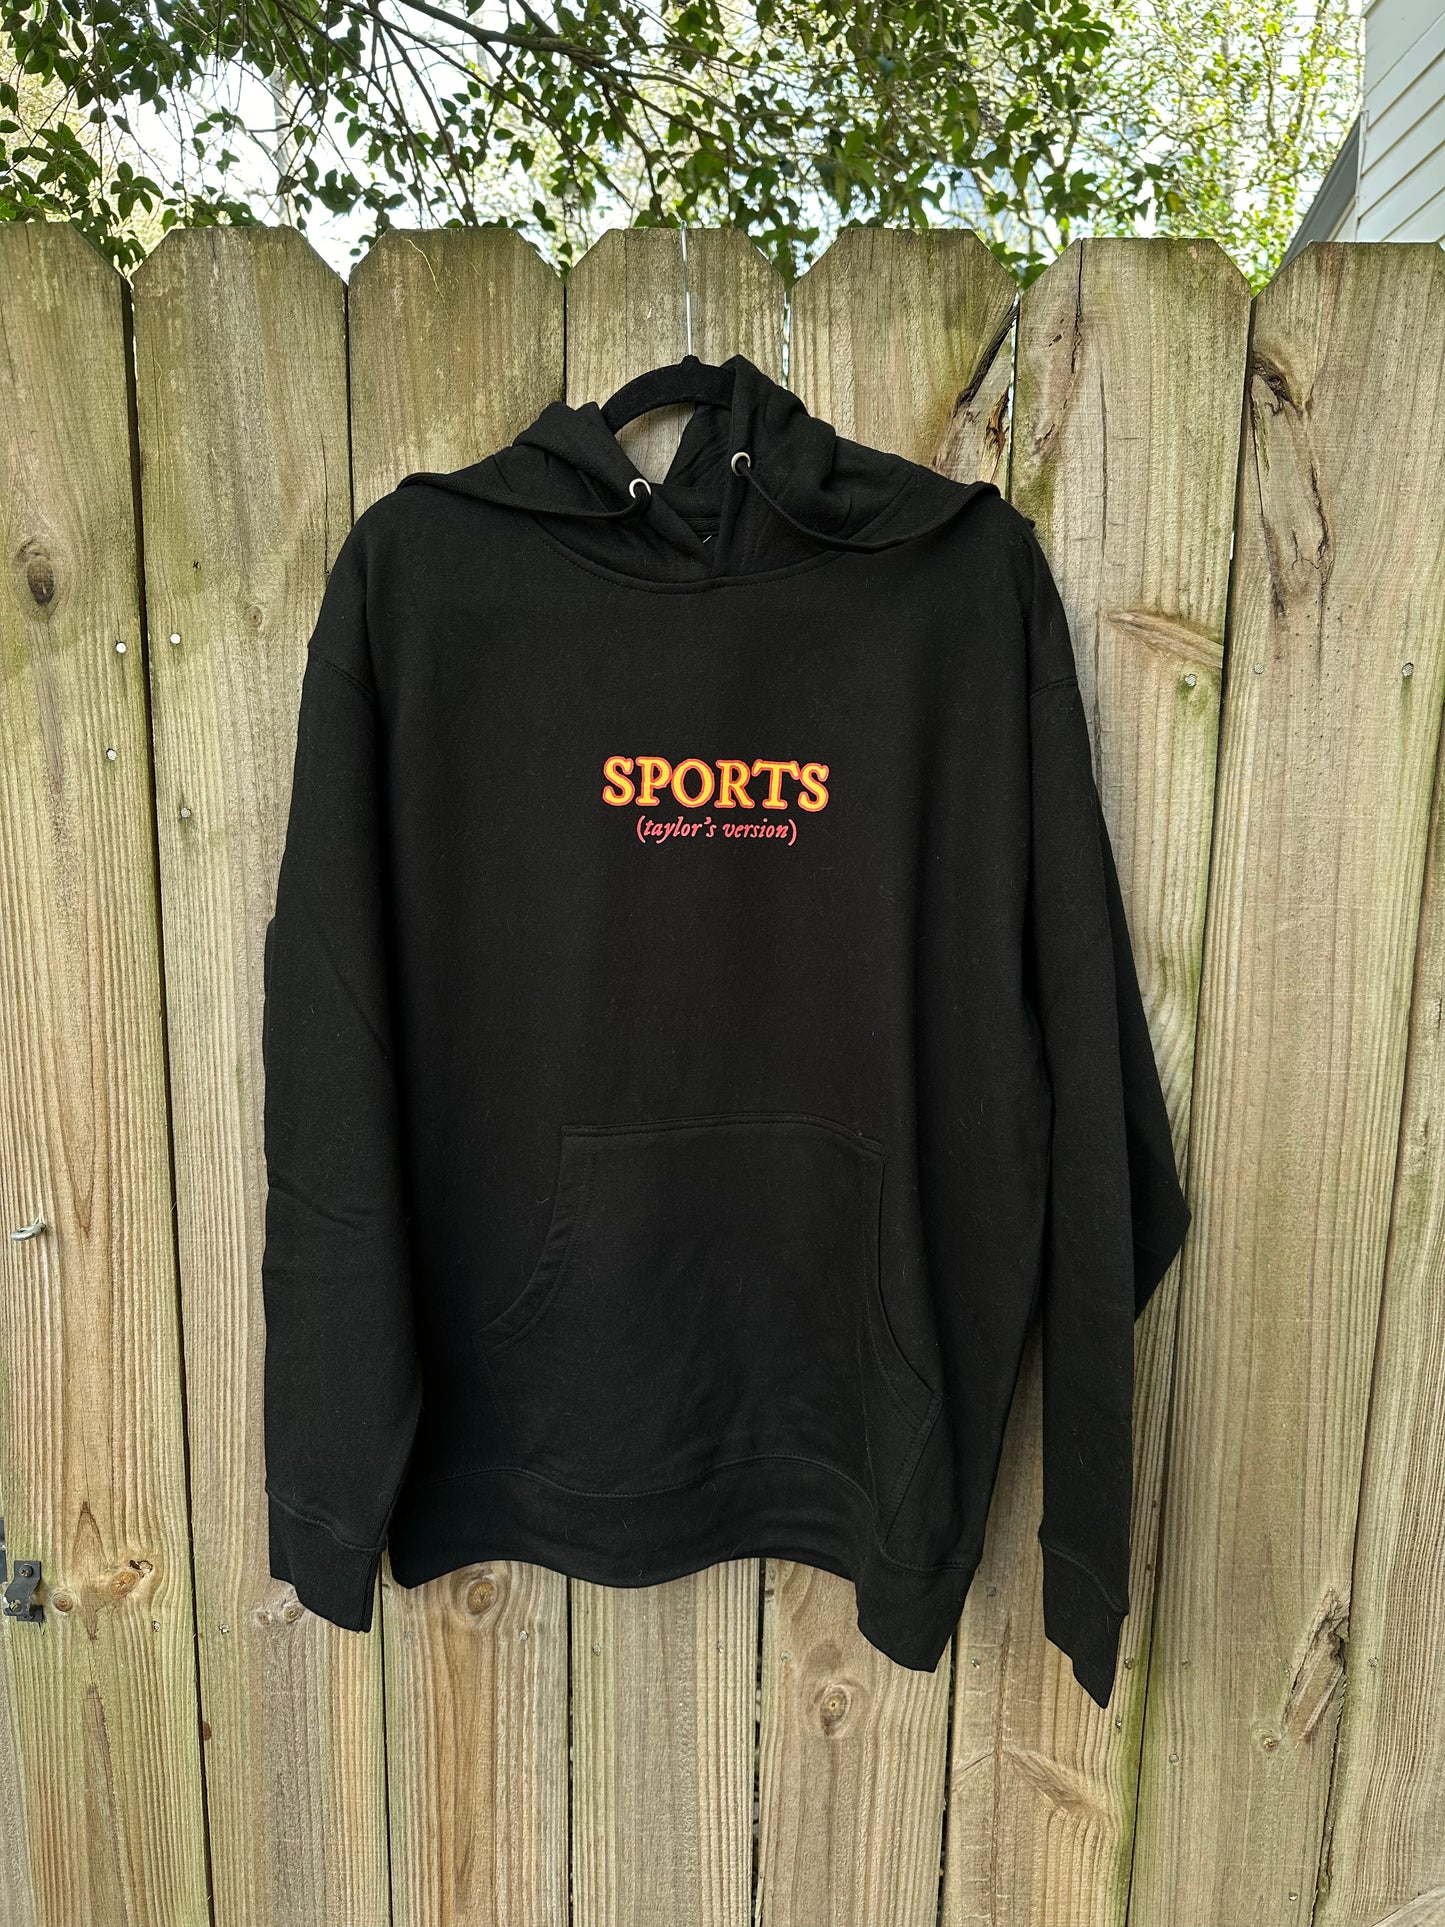 SPORTS (taylor’s version) sweatshirt